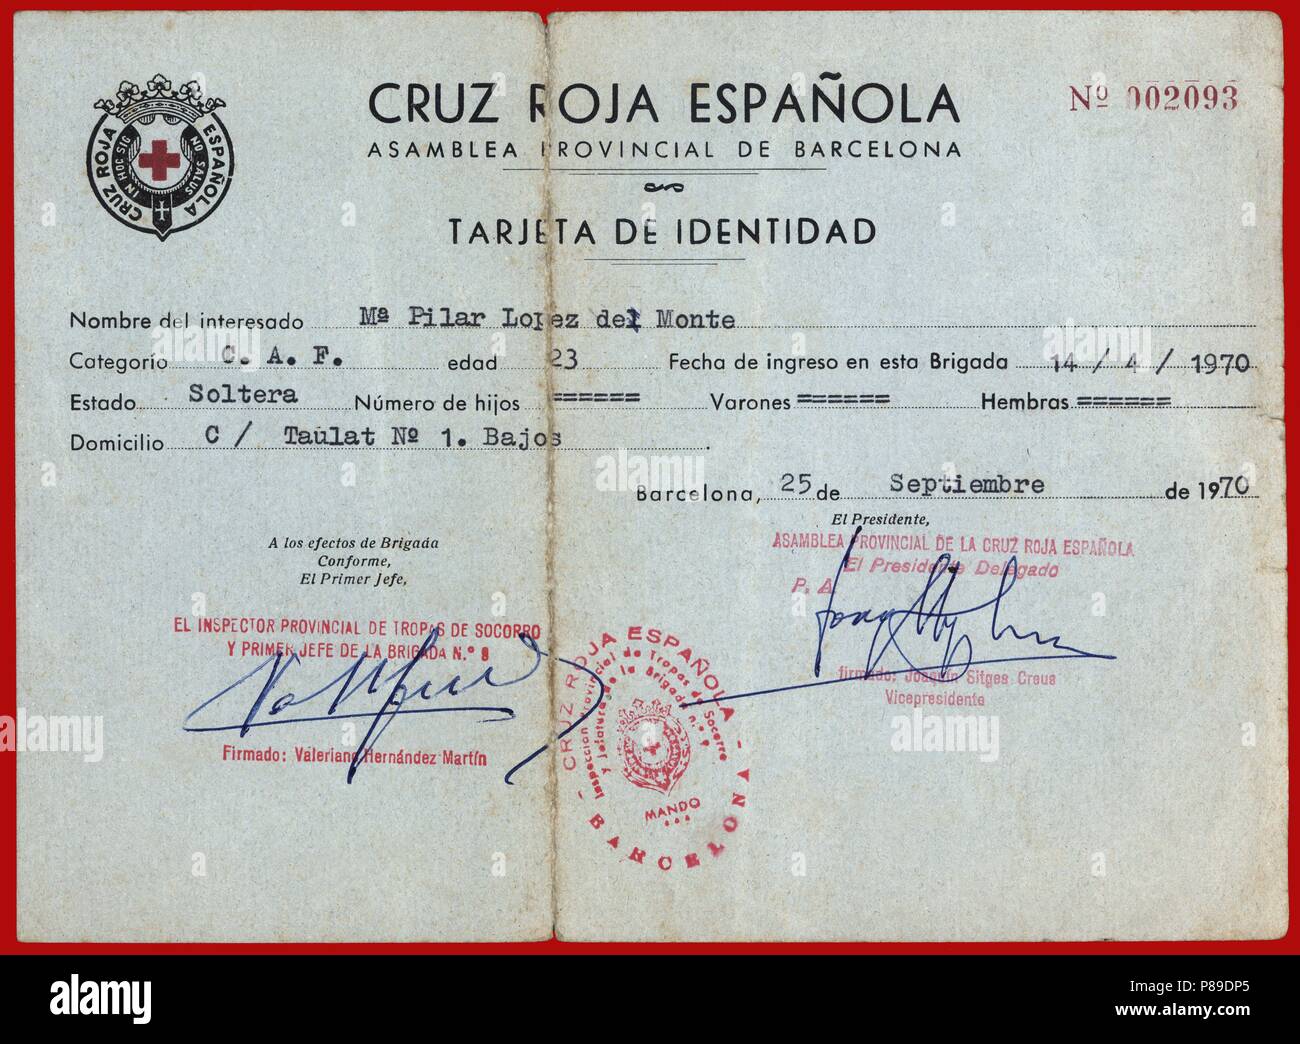 España. Tarjeta de identidad de Cruz Roja Española. Barcelona, año 1970. Stock Photo